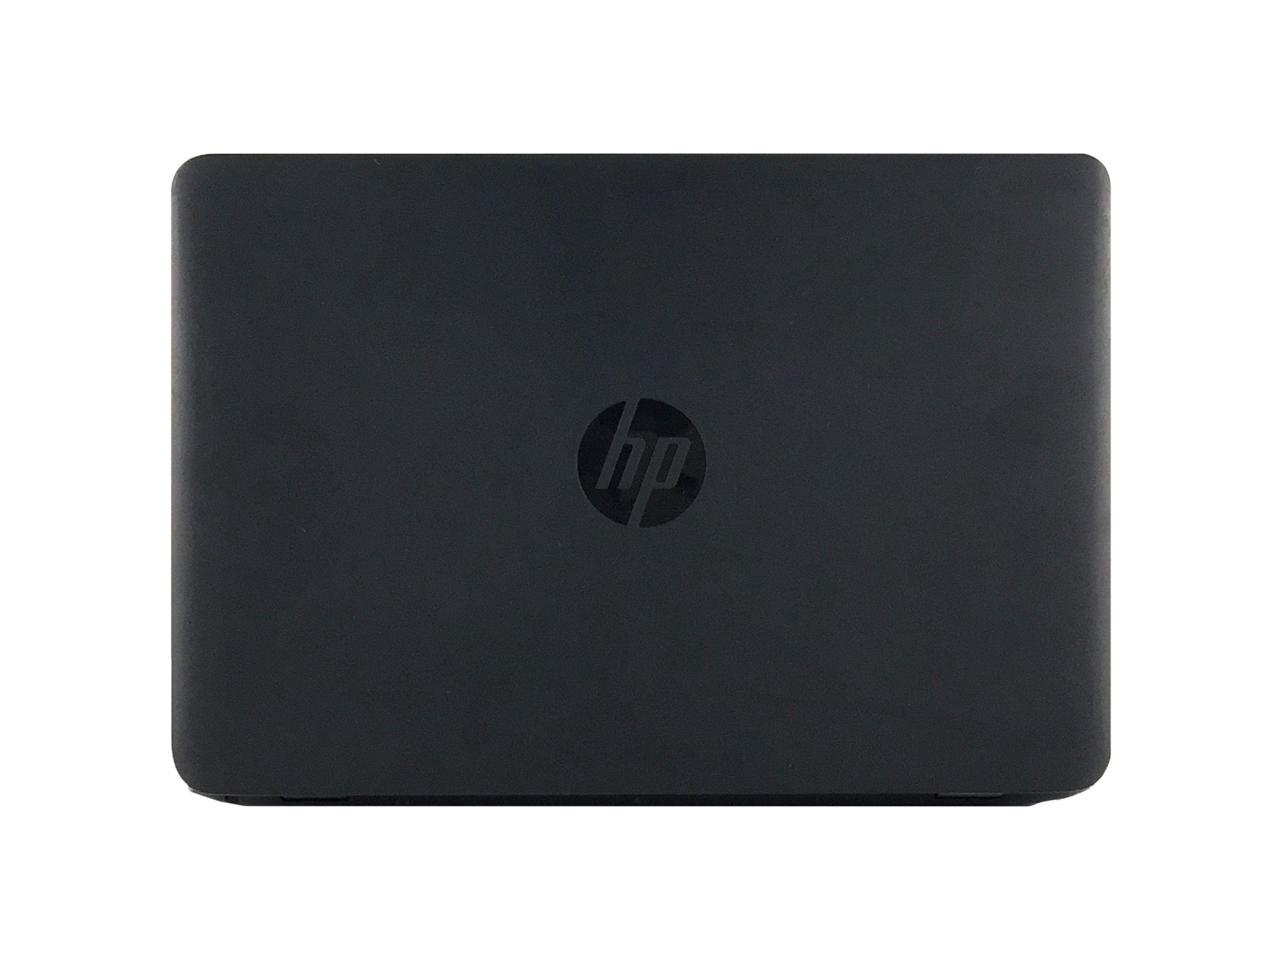 HP Grade A Elitebook 840G2 14.0" Laptop Intel Core i5 5th Gen 5300U (2.30 GHz) 16 GB DDR3L 500 GB WIFI Windows 10 Home 64 bits (Multi-language) 1 Year Warranty